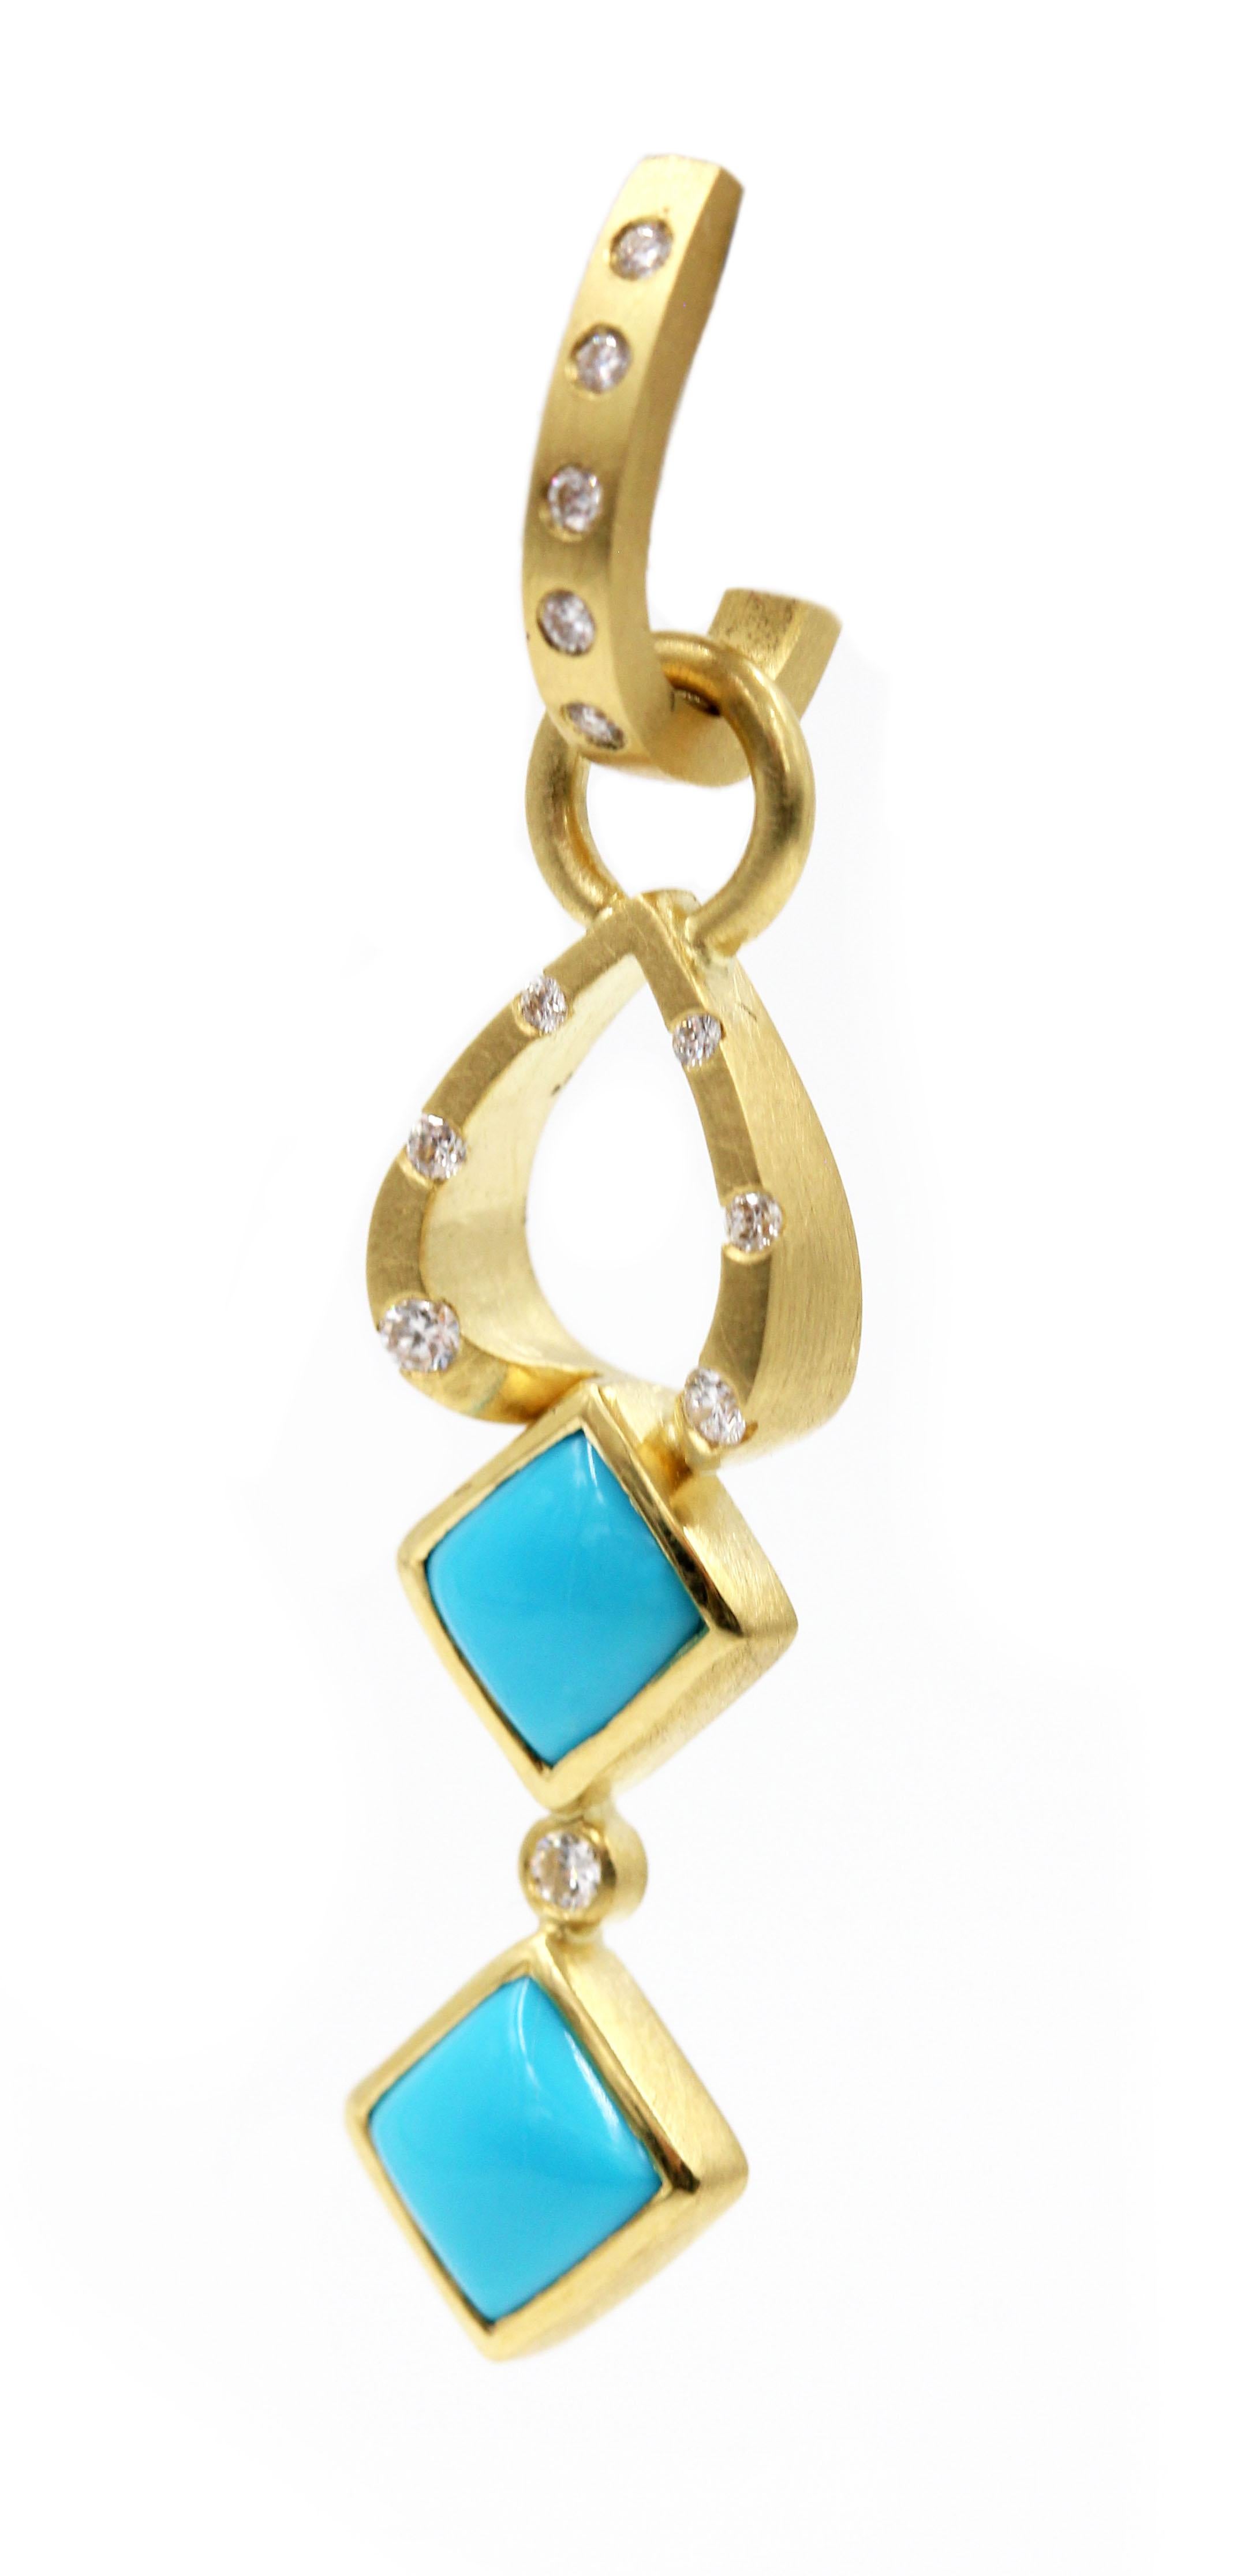 Robin Waynee, Sleeping Beauty Earrings, VS1 Diamonds, Turquoise, 18 Karat Gold In New Condition For Sale In Santa Fe, NM